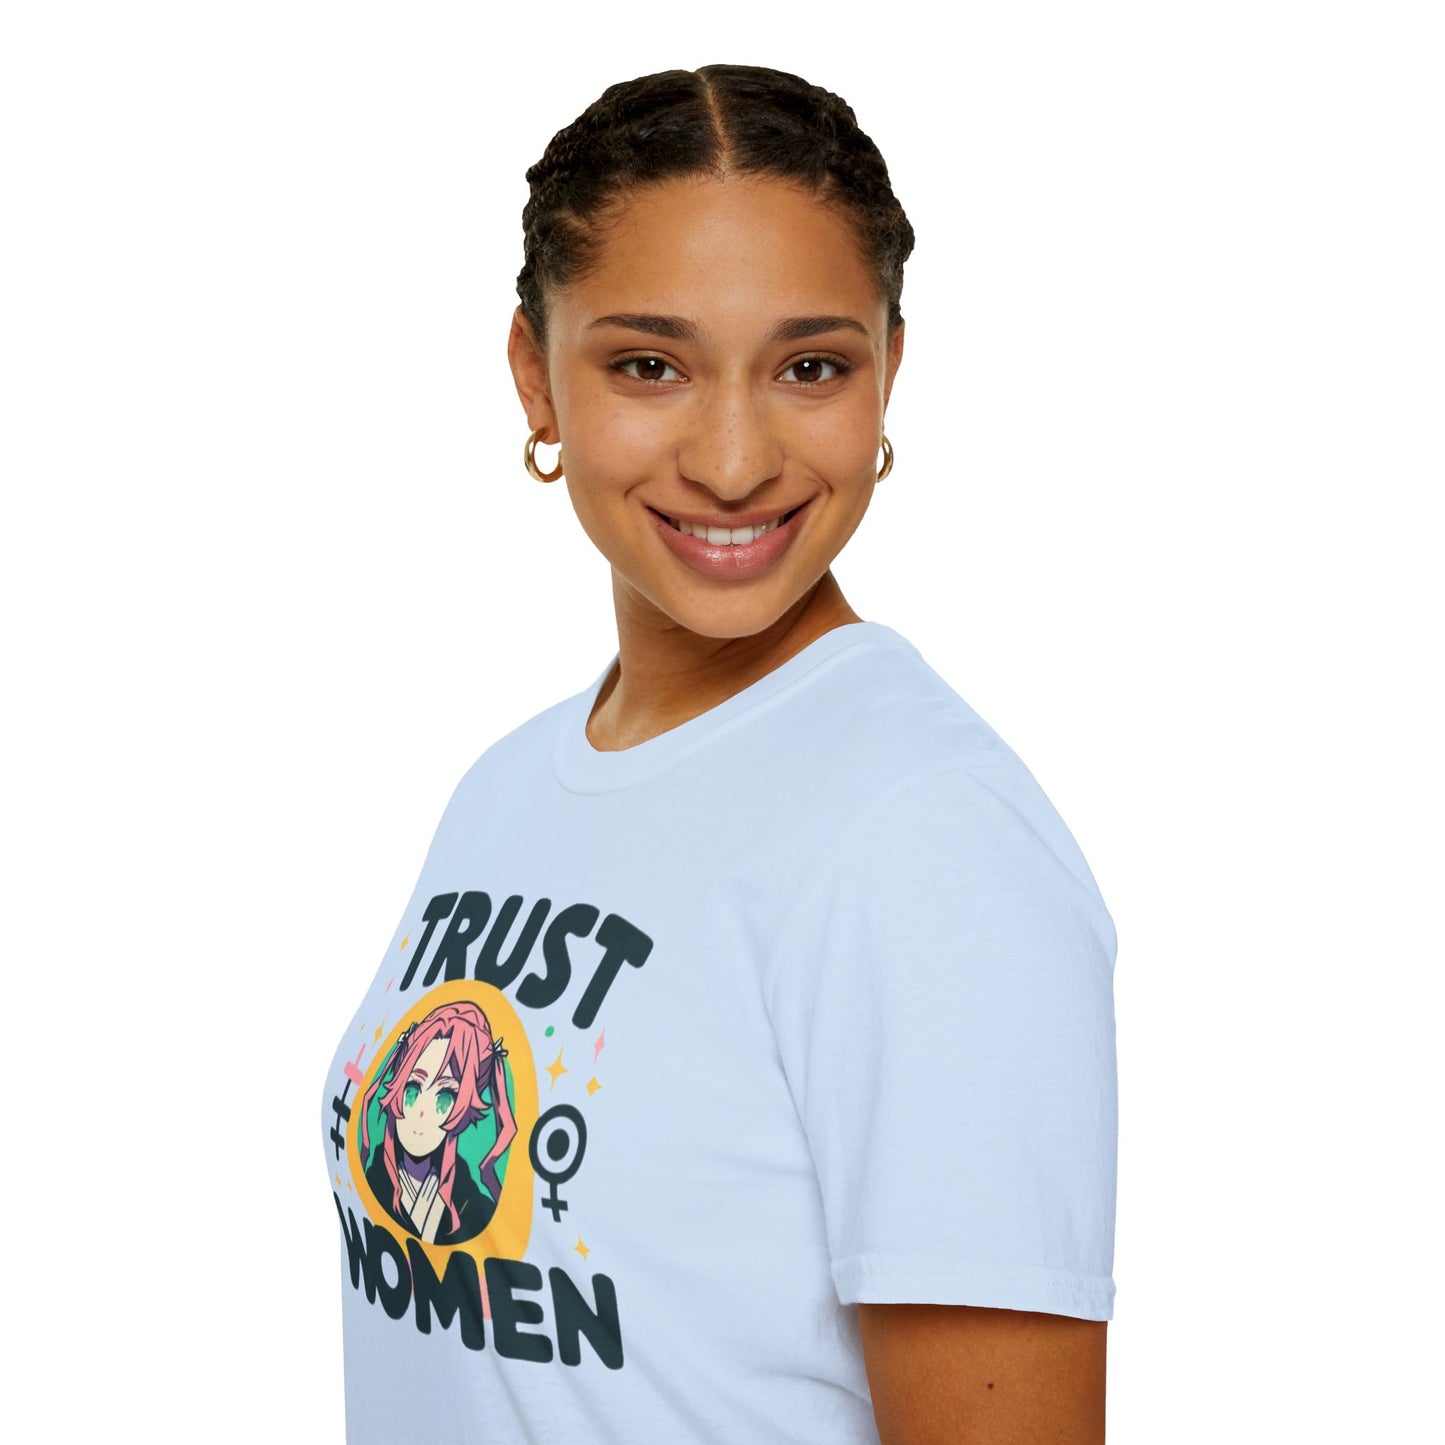 Trust Women! Bold Uncompromising Statement Soft Style t-shirt |unisex| Modern Art Activism Tee Shirt, Show You Care! Protest & Activism!